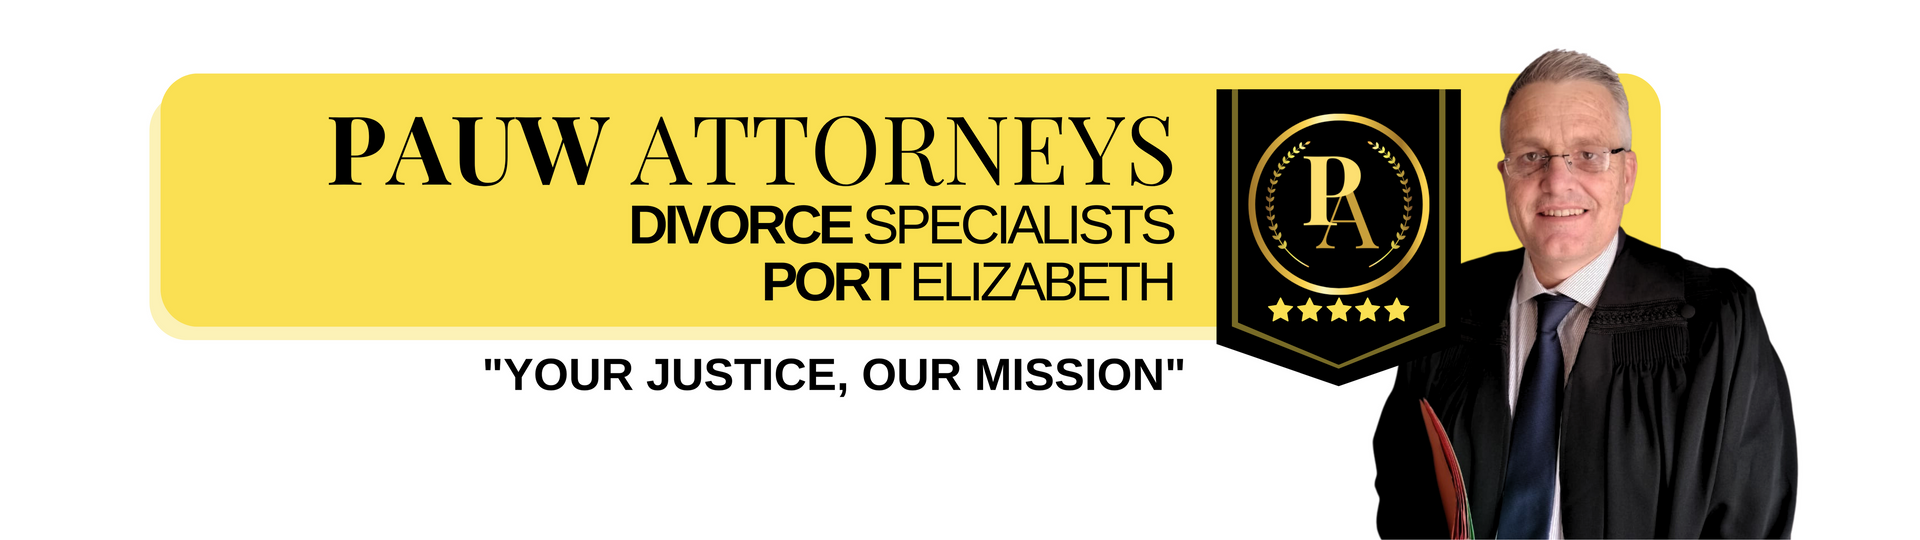 Settlement agreements by Pauw Attorneys in Port Elizabeth